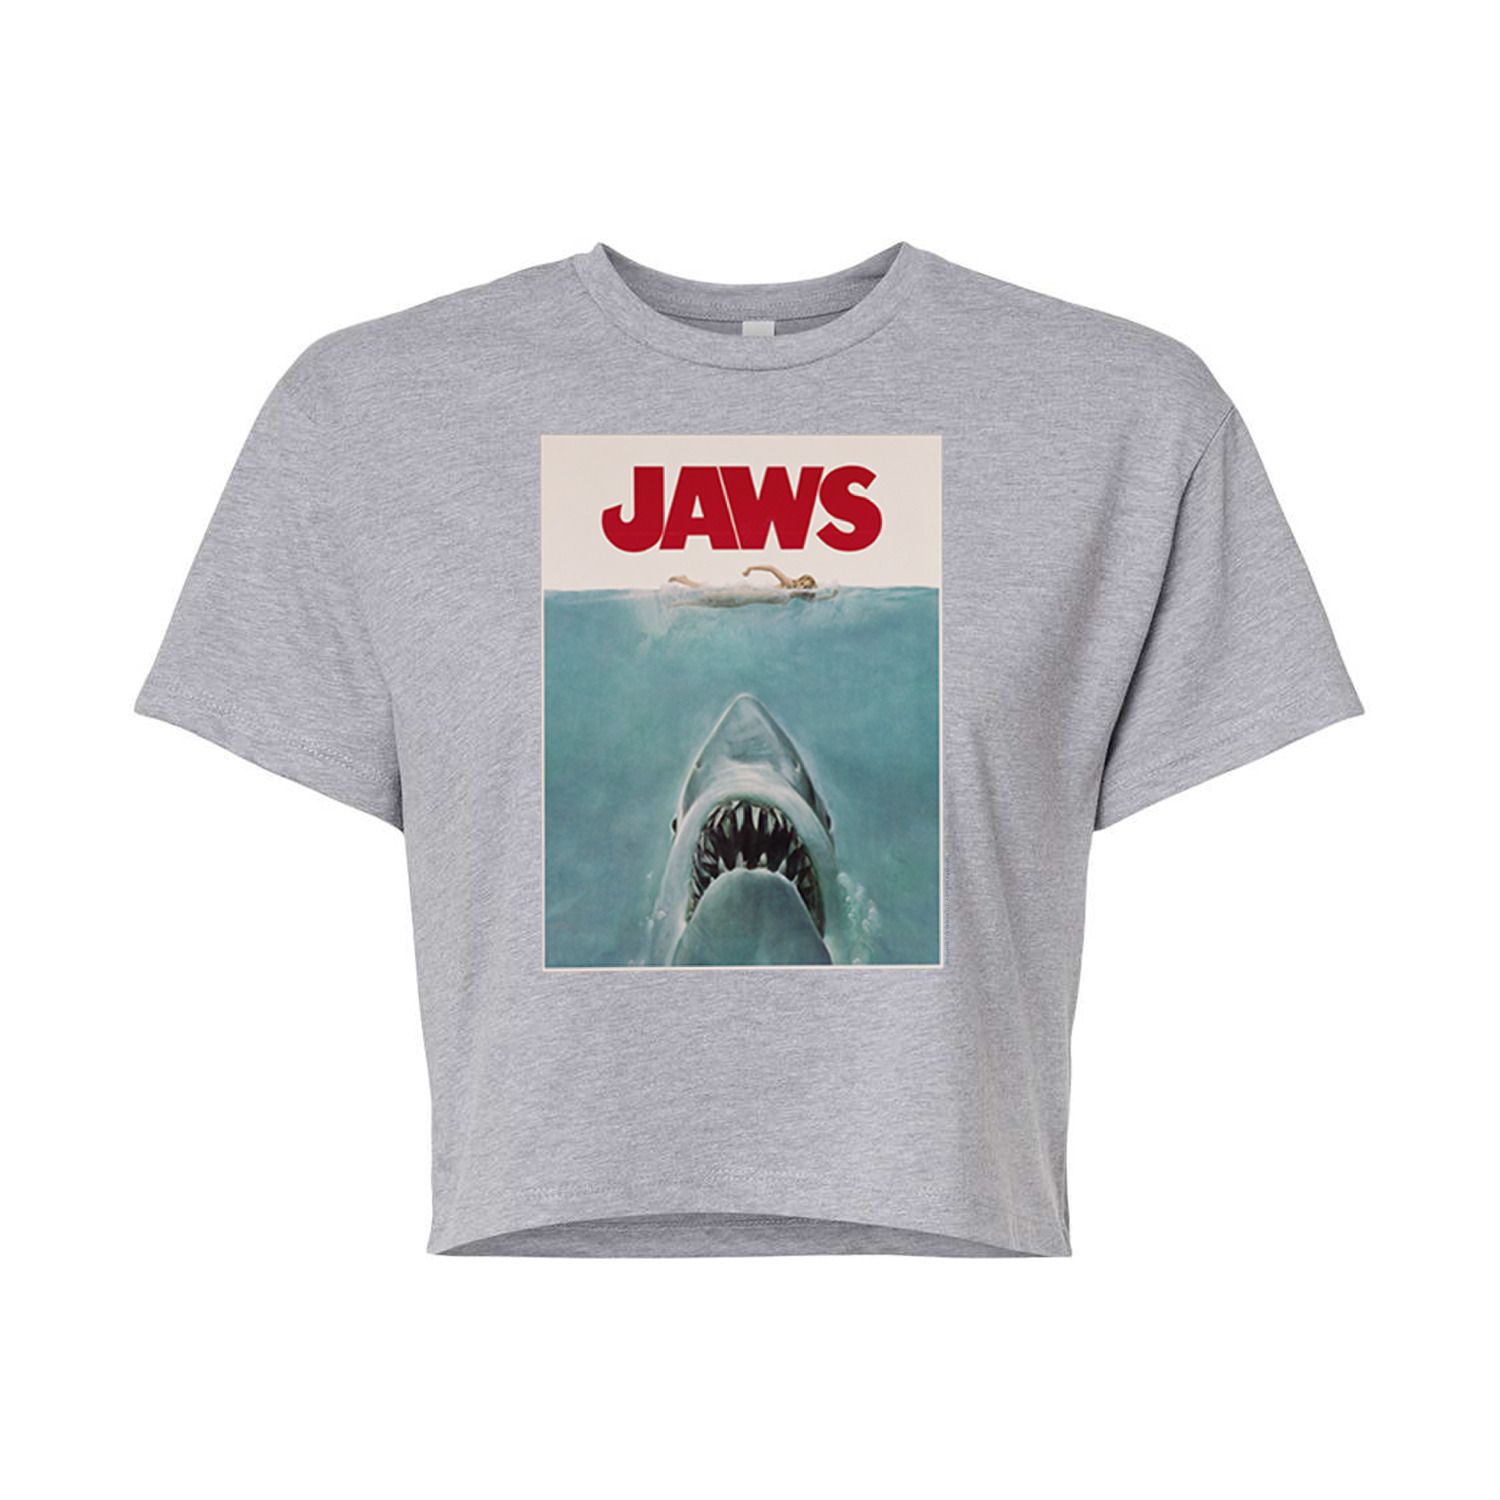 Укороченная футболка с рисунком Juniors' Jaws Licensed Character, серый